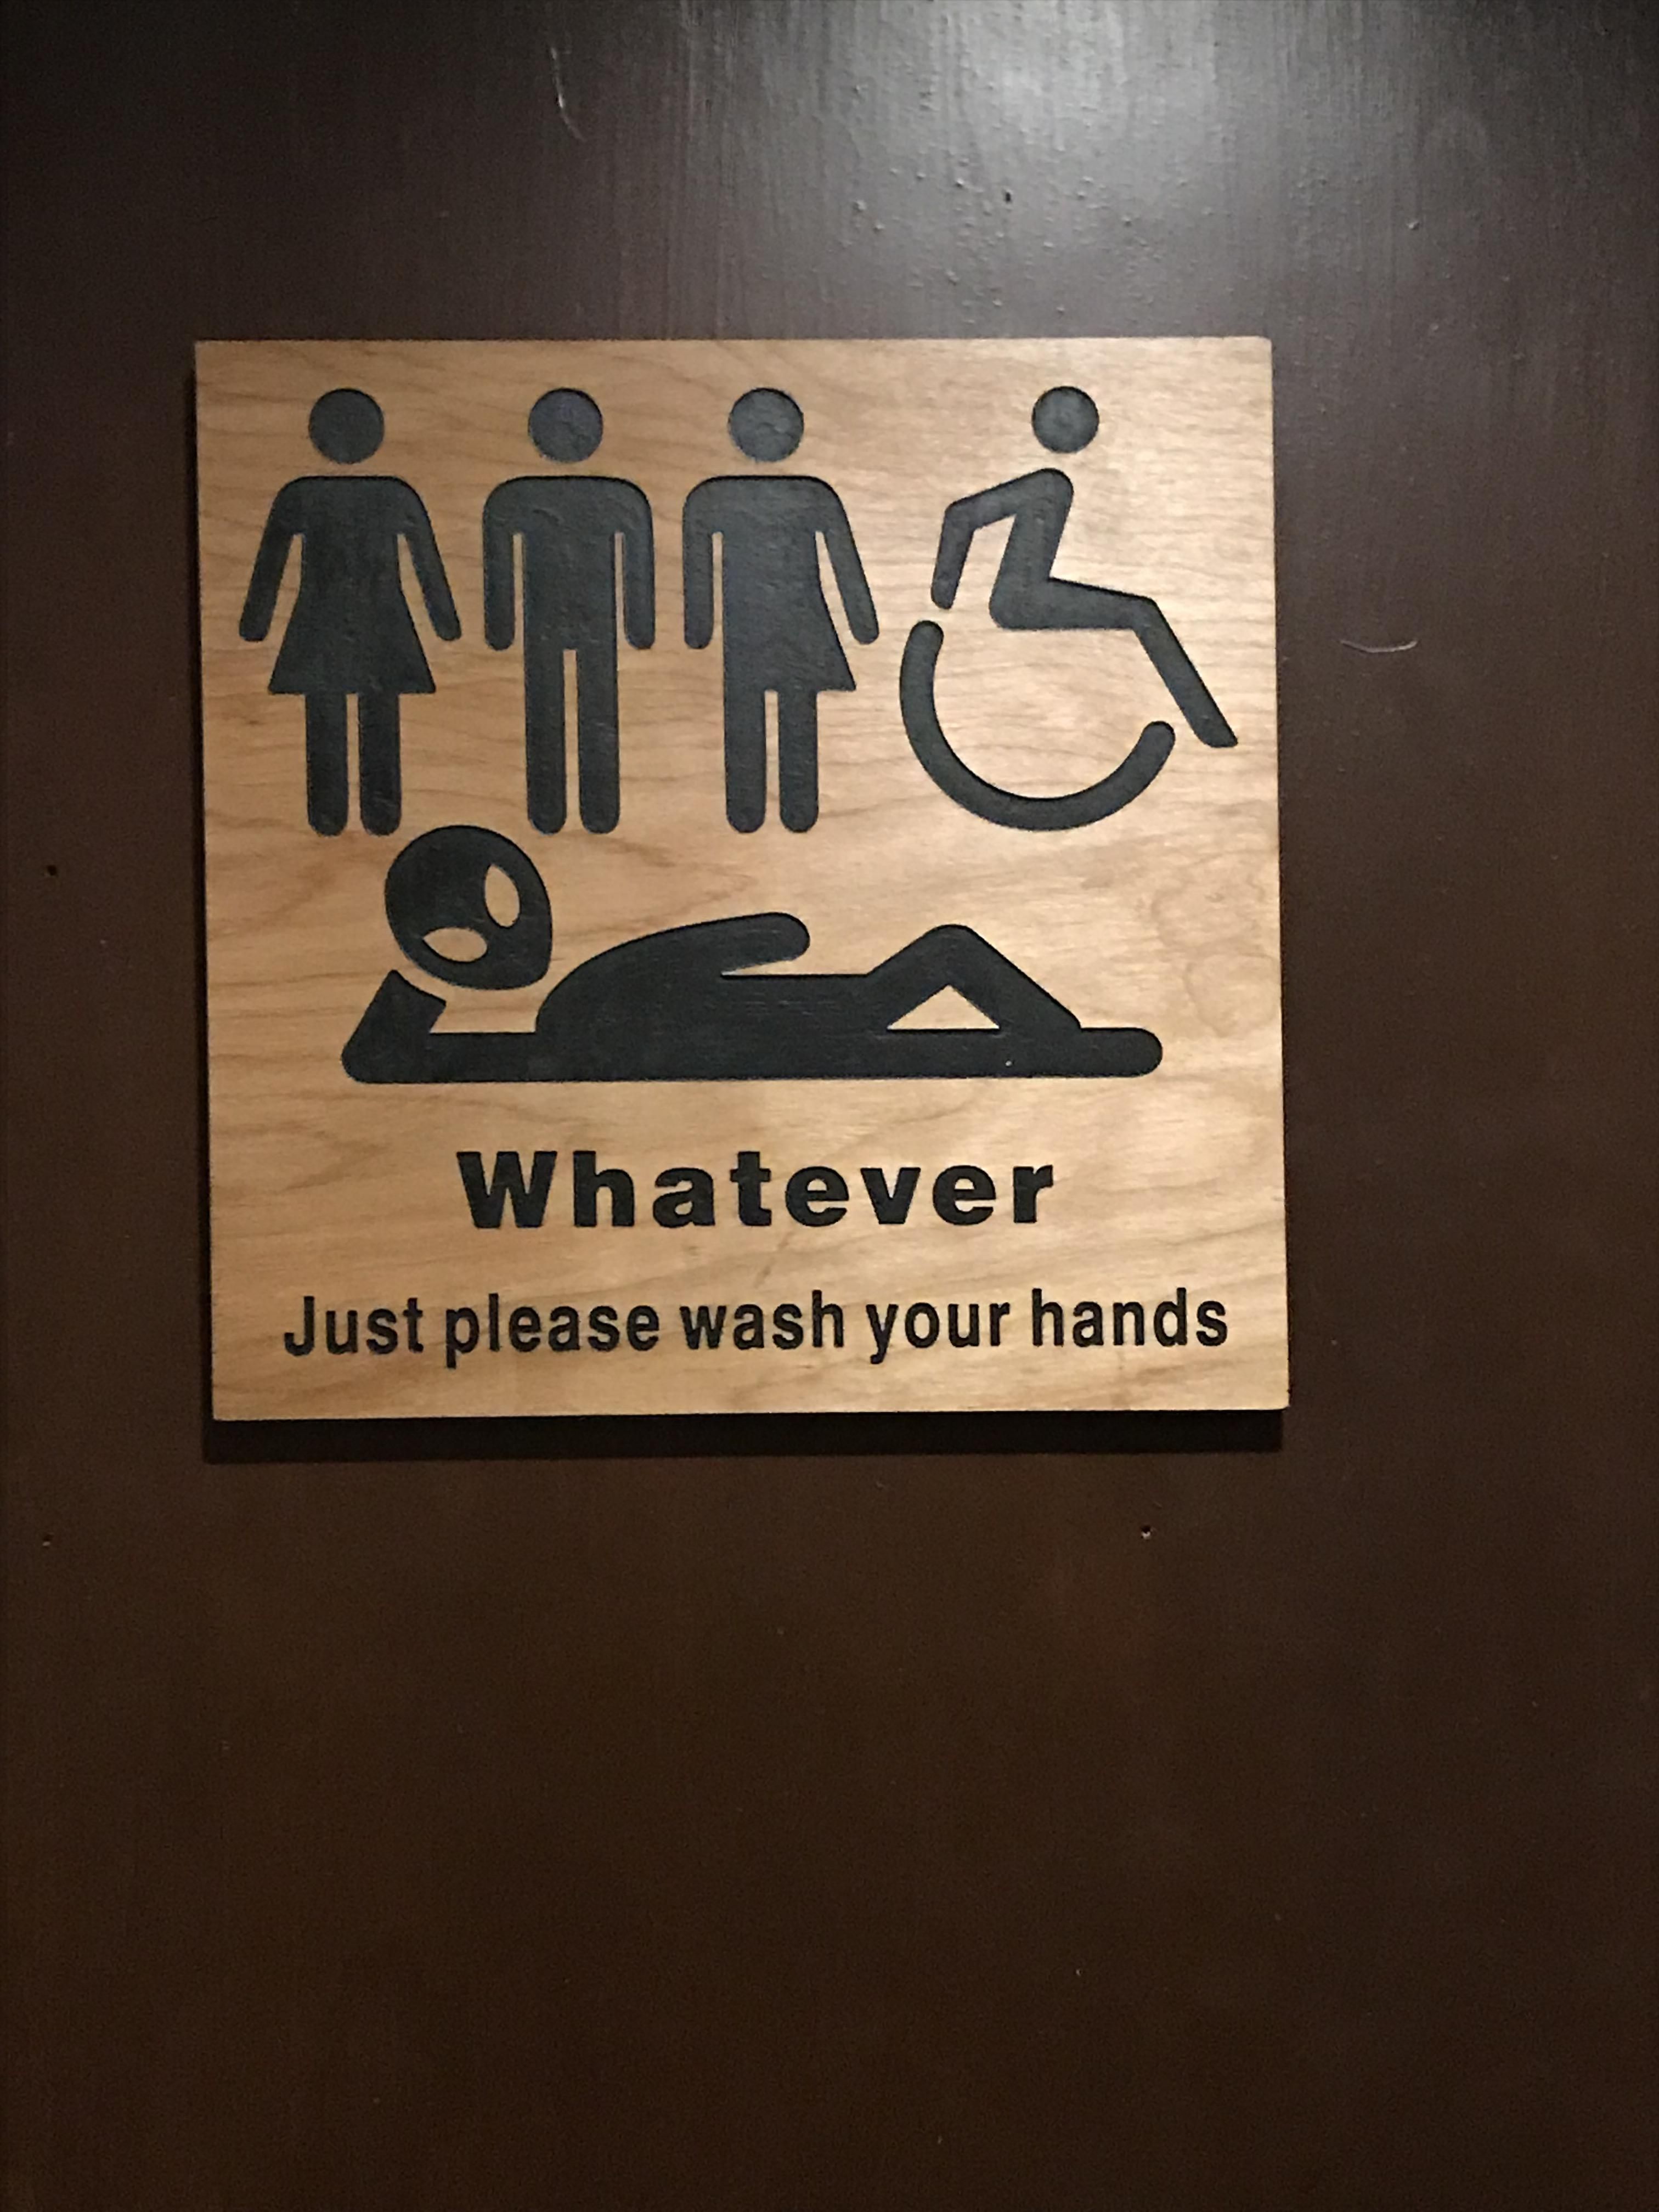 Best bathroom sign ever!